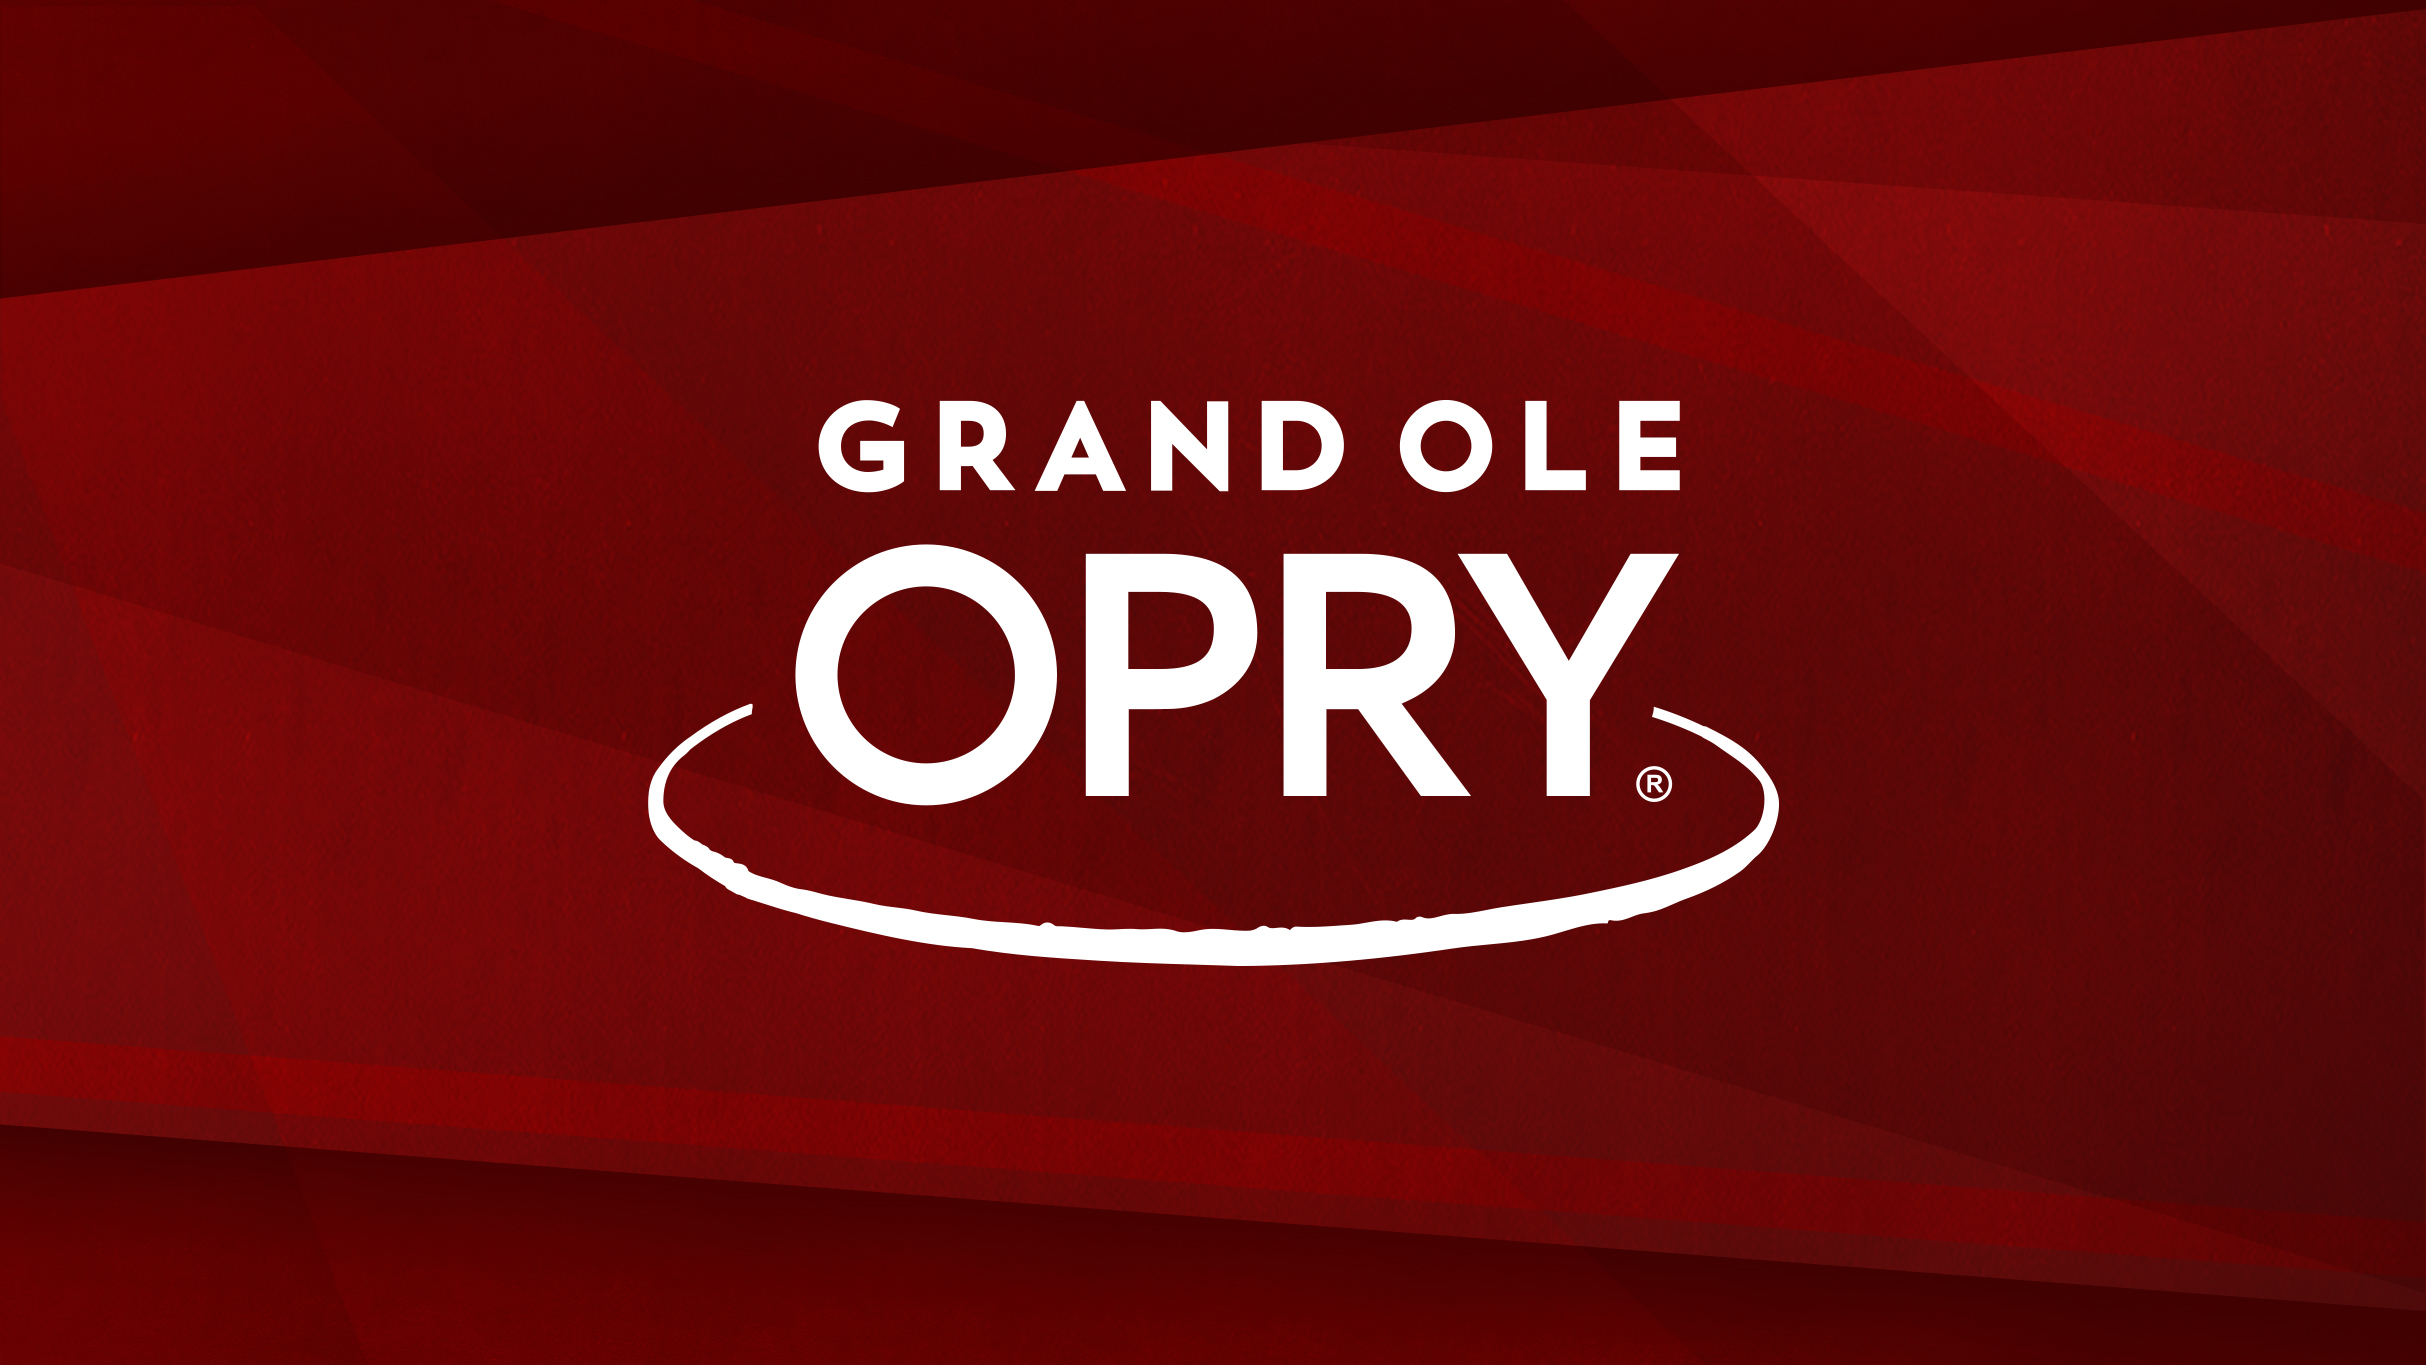 Grand Ole Opry w/ Jelly Roll